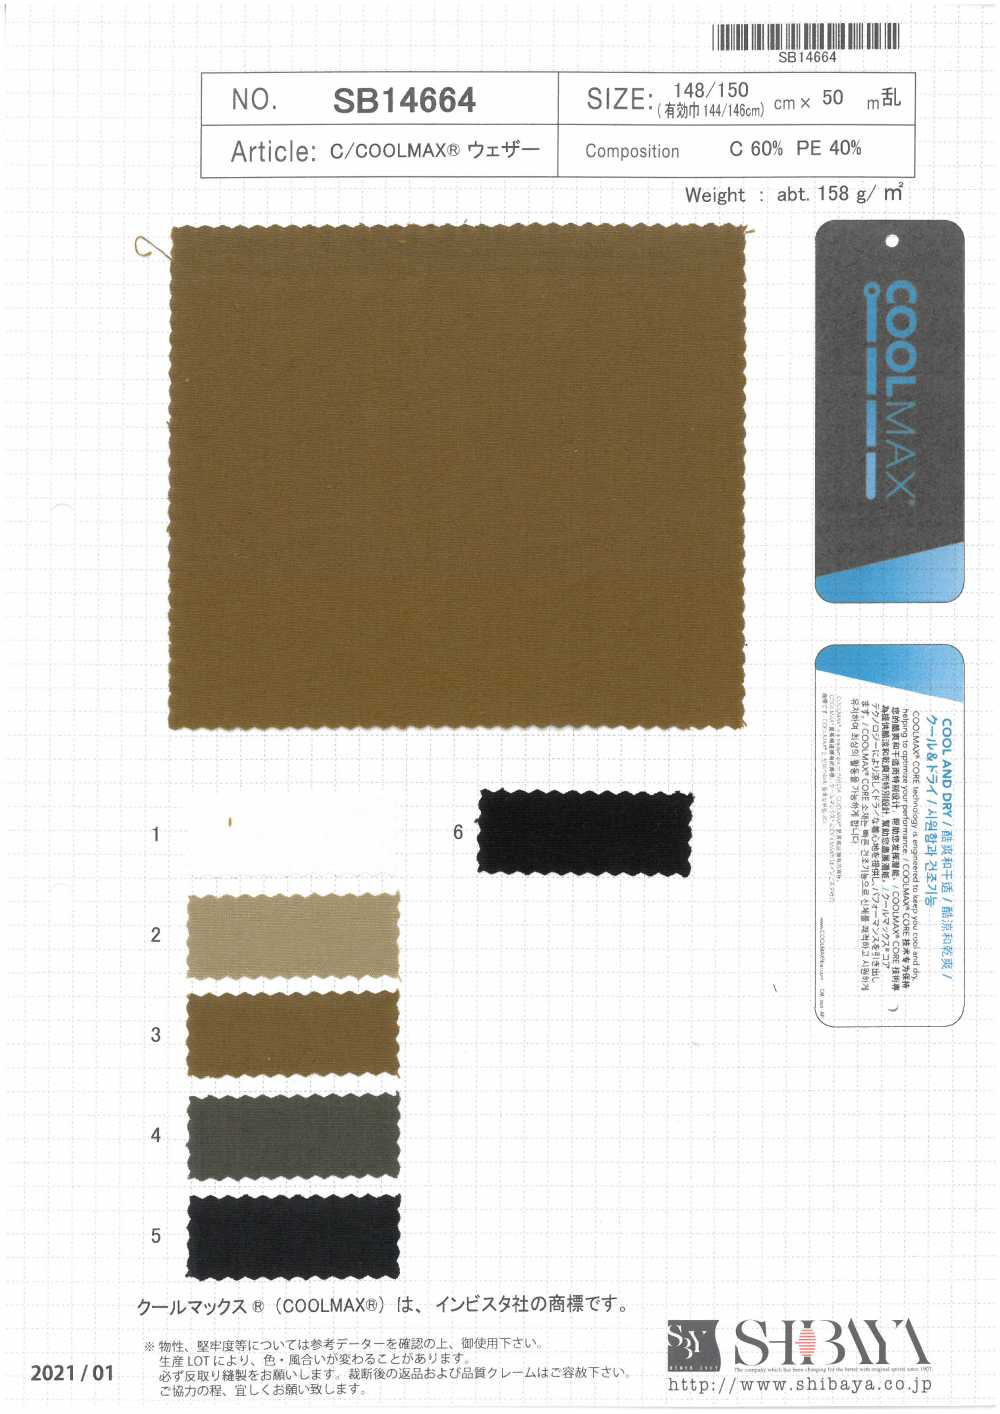 SB14664 Pano Impermeável C / COOLMAX[Têxtil / Tecido] SHIBAYA